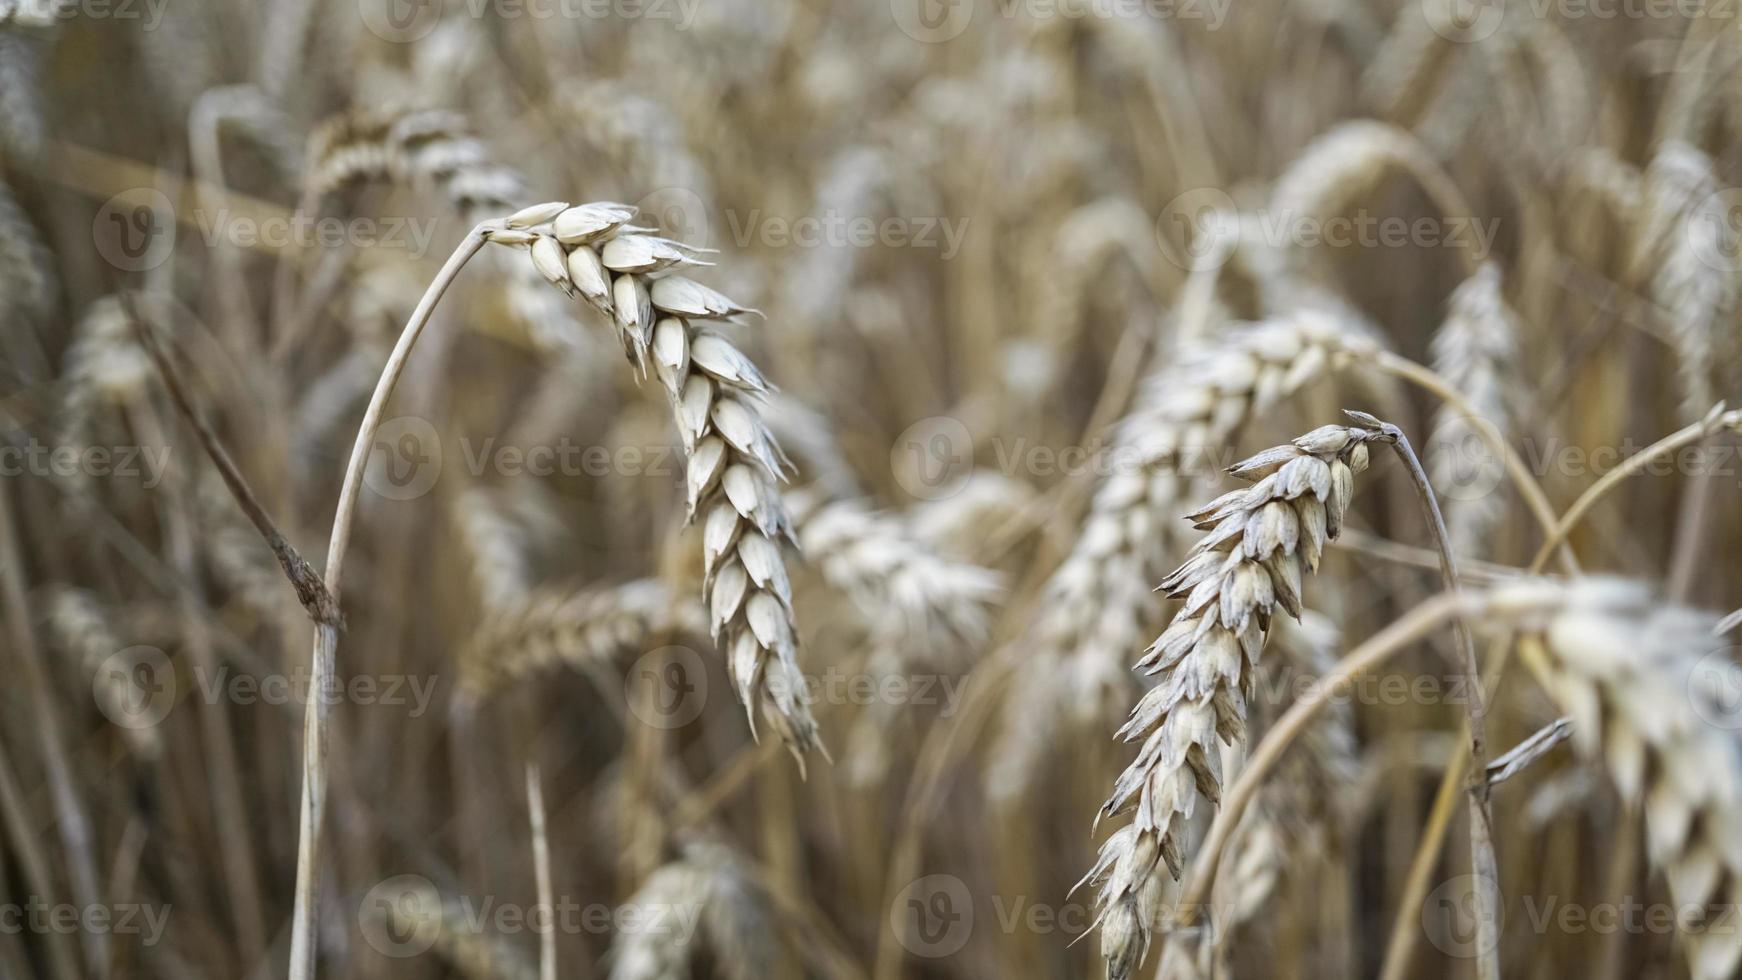 cerca de los tallos de trigo dorado, espiga de grano. foto